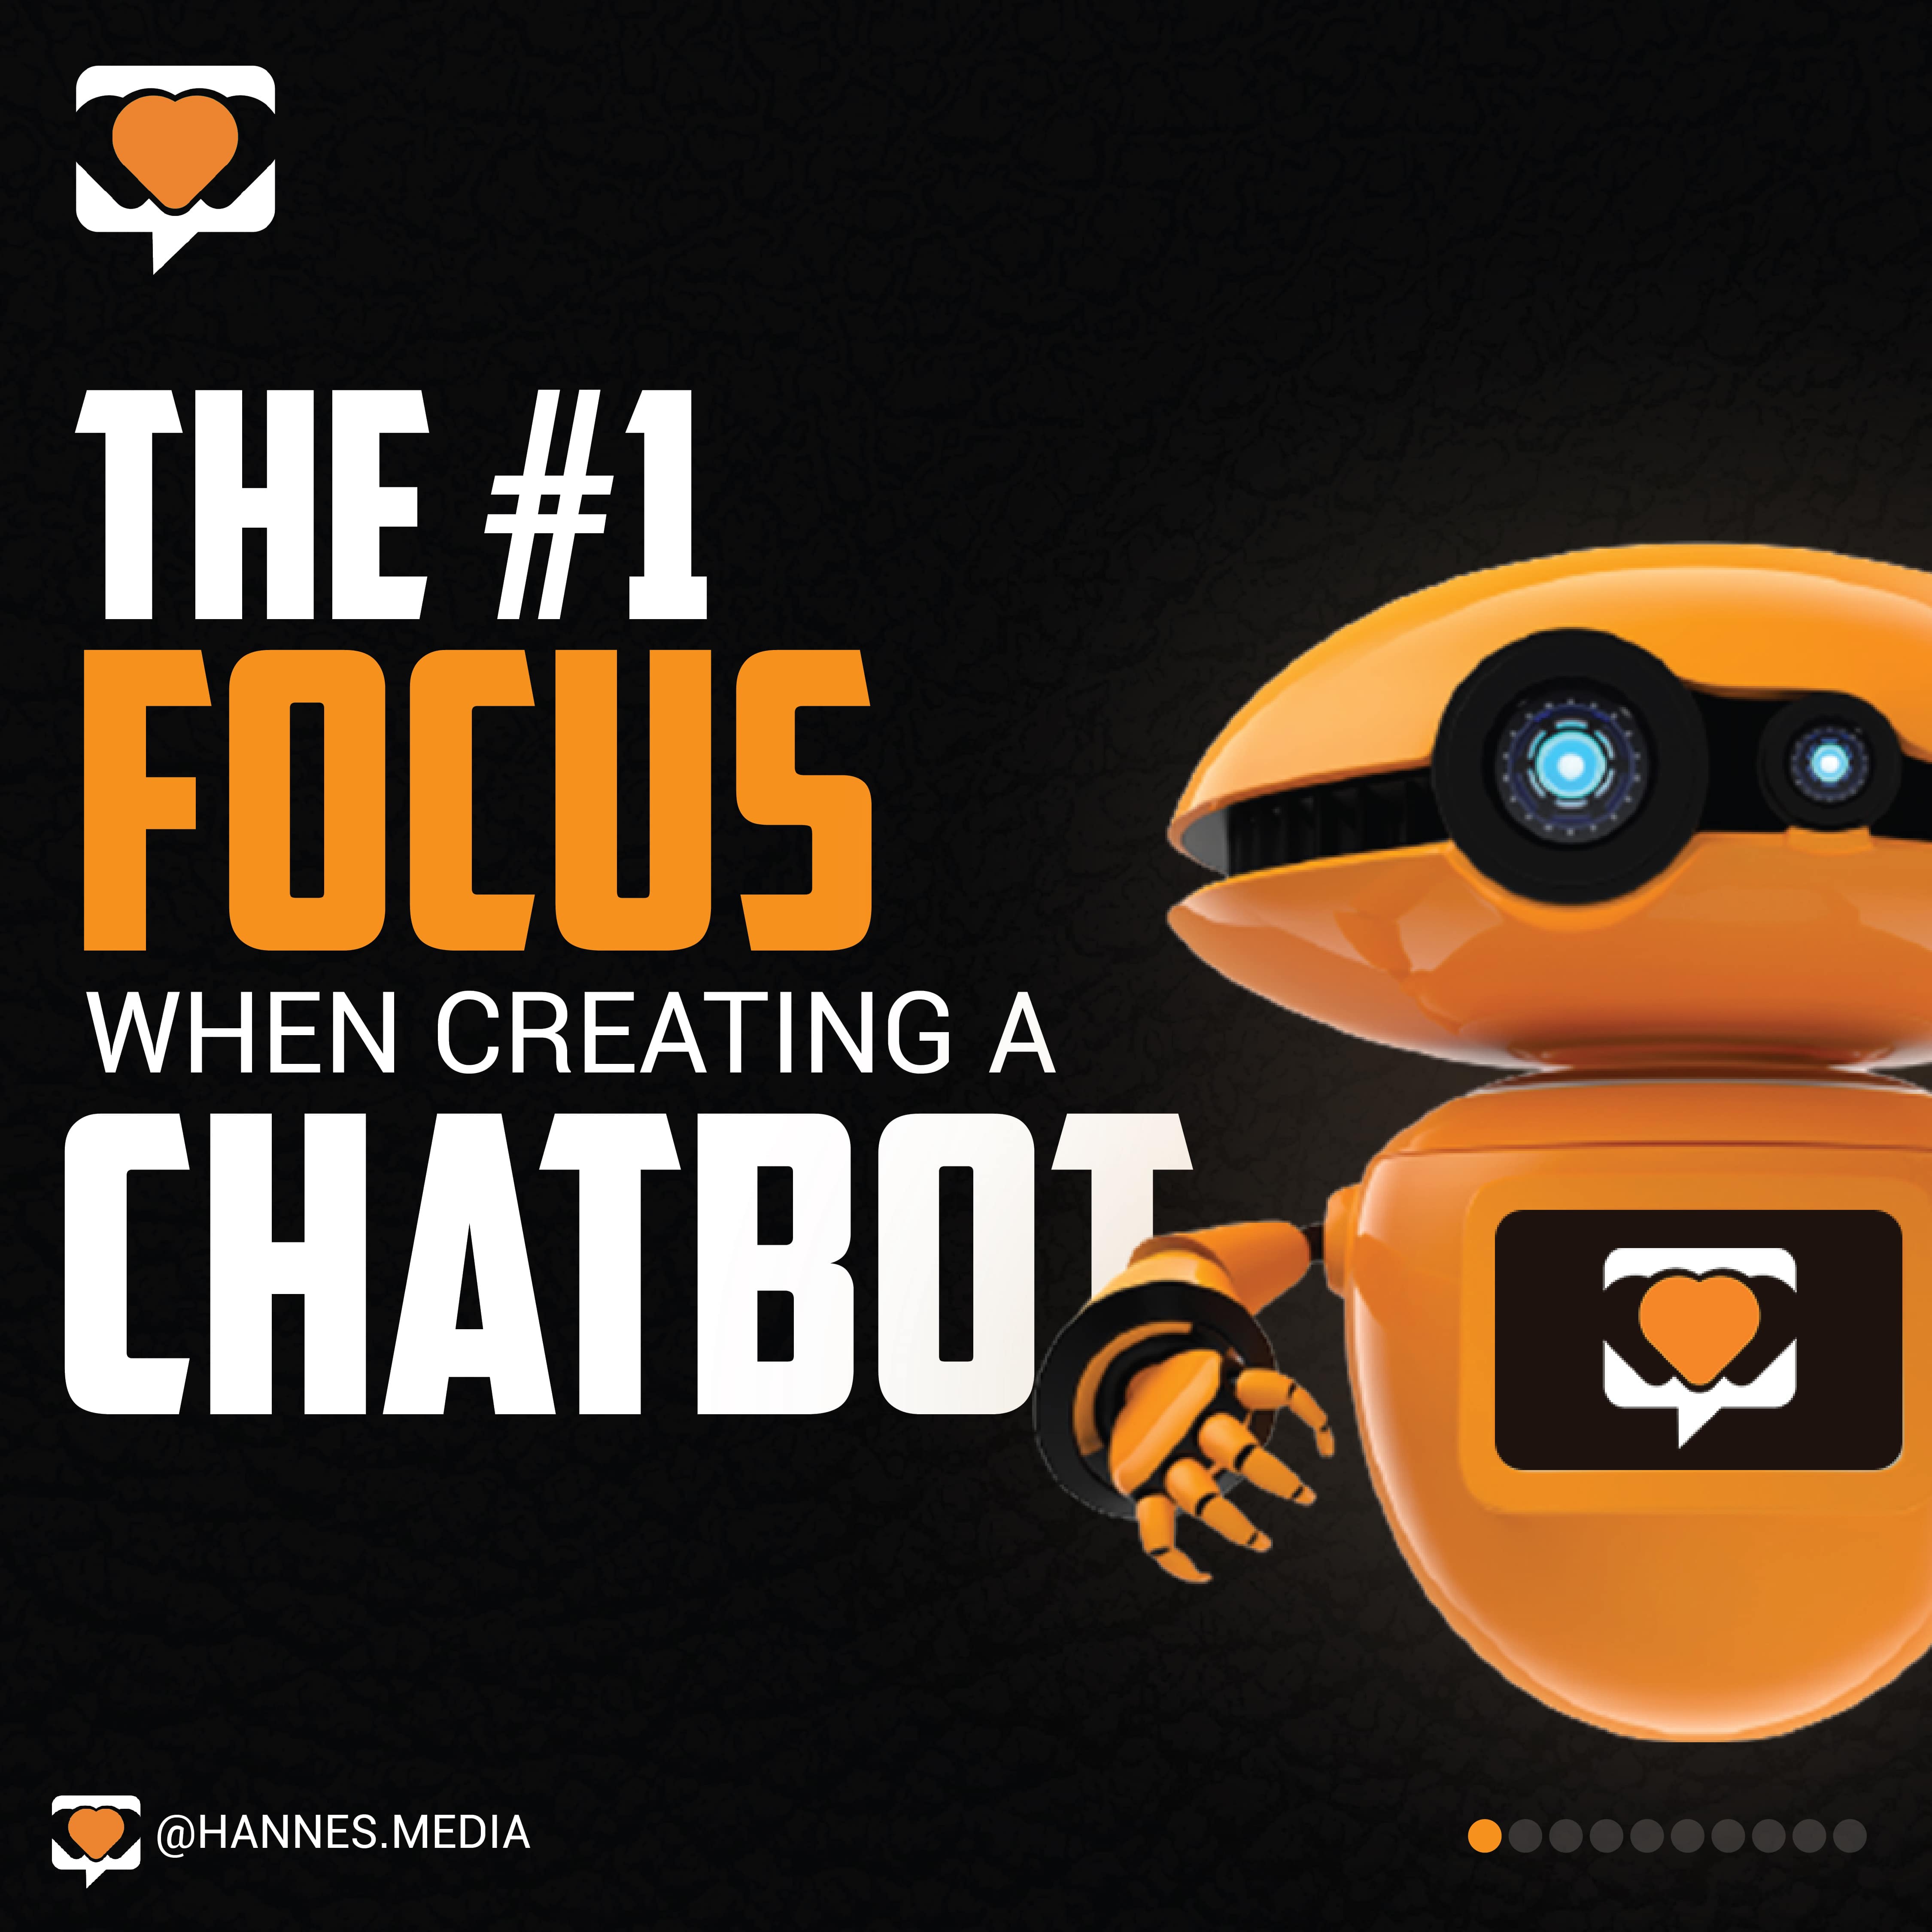 Chatbot-Marketing-Conversational-Messenger-Hannes-Media